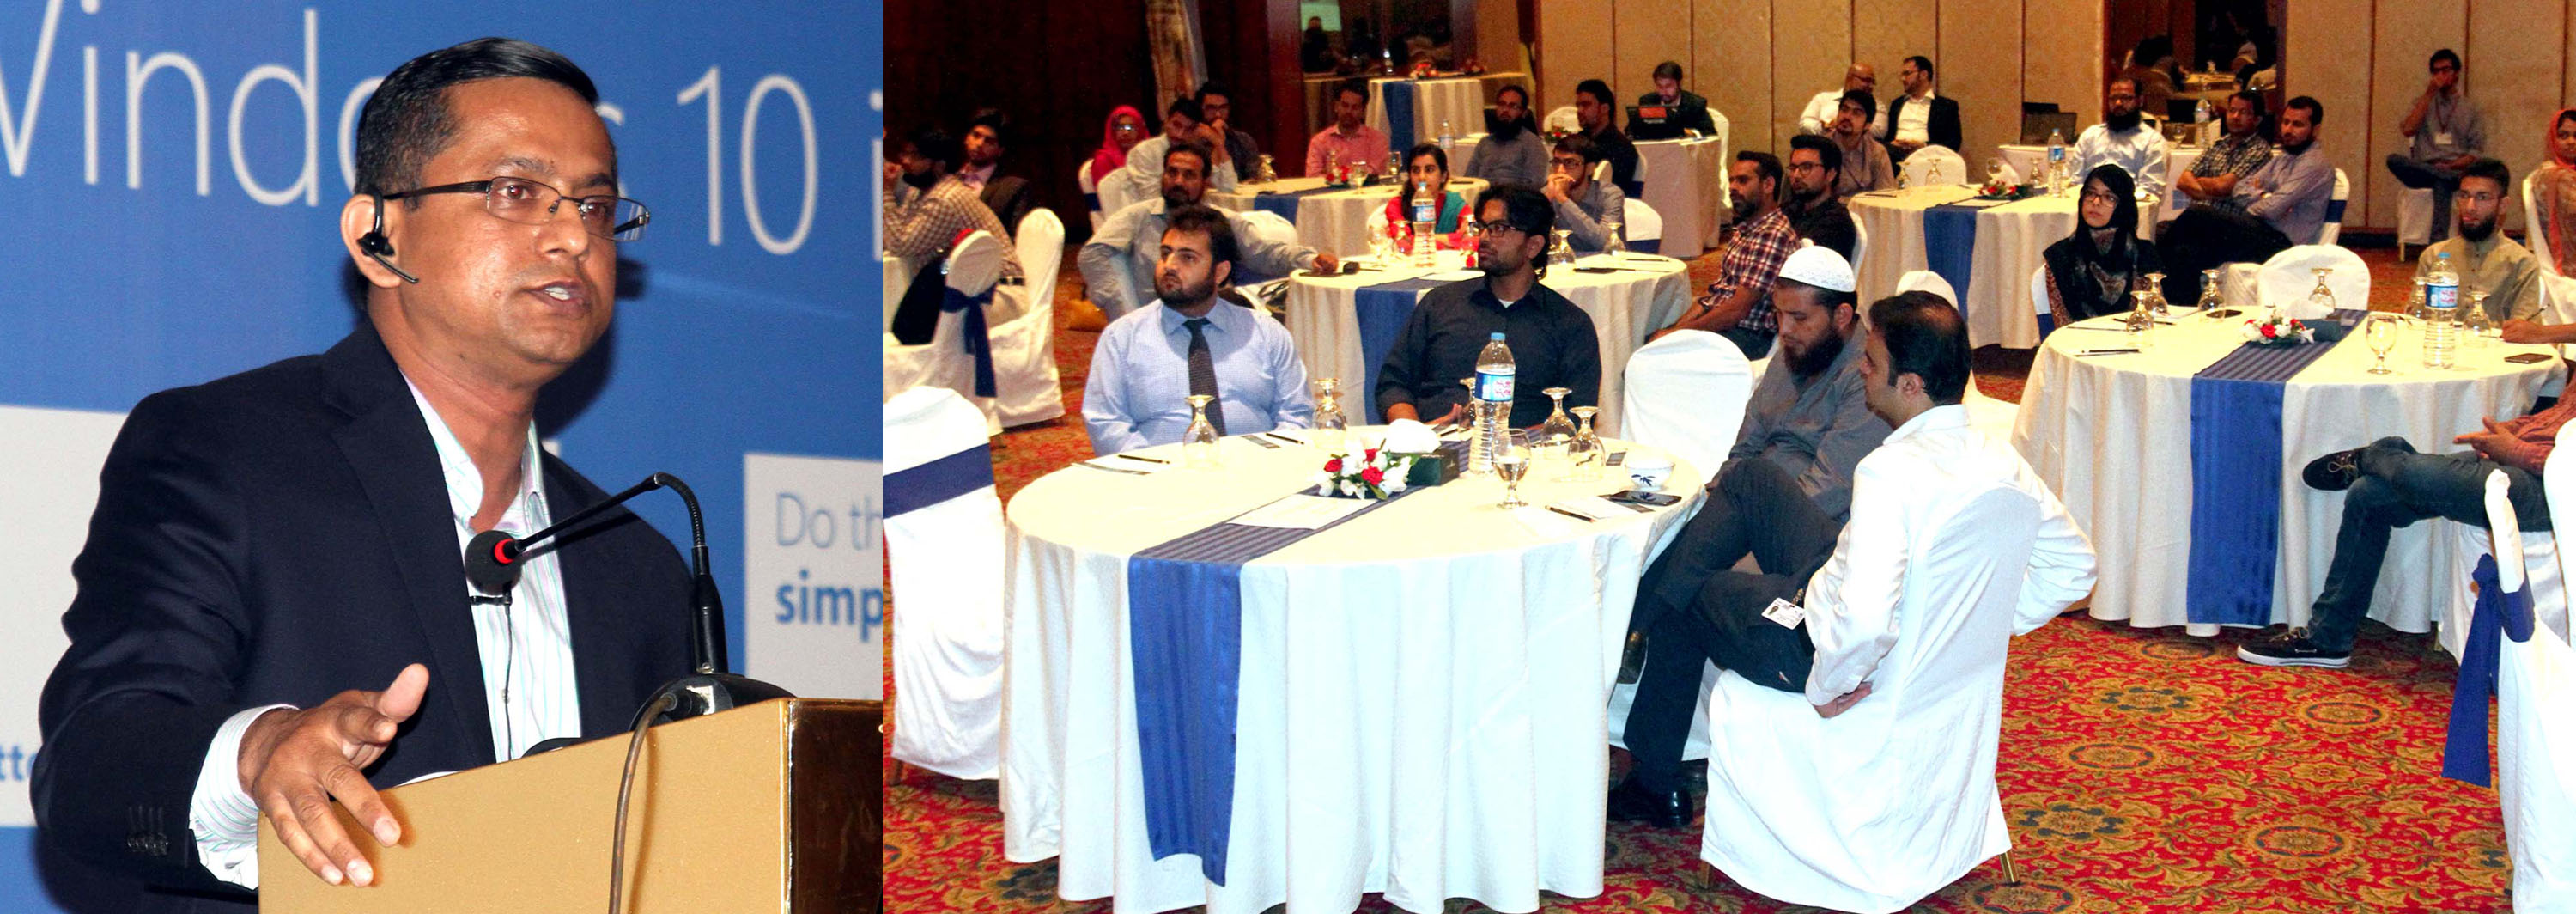 Microsoft Windows 10 Enterprise Summit held in Karachi